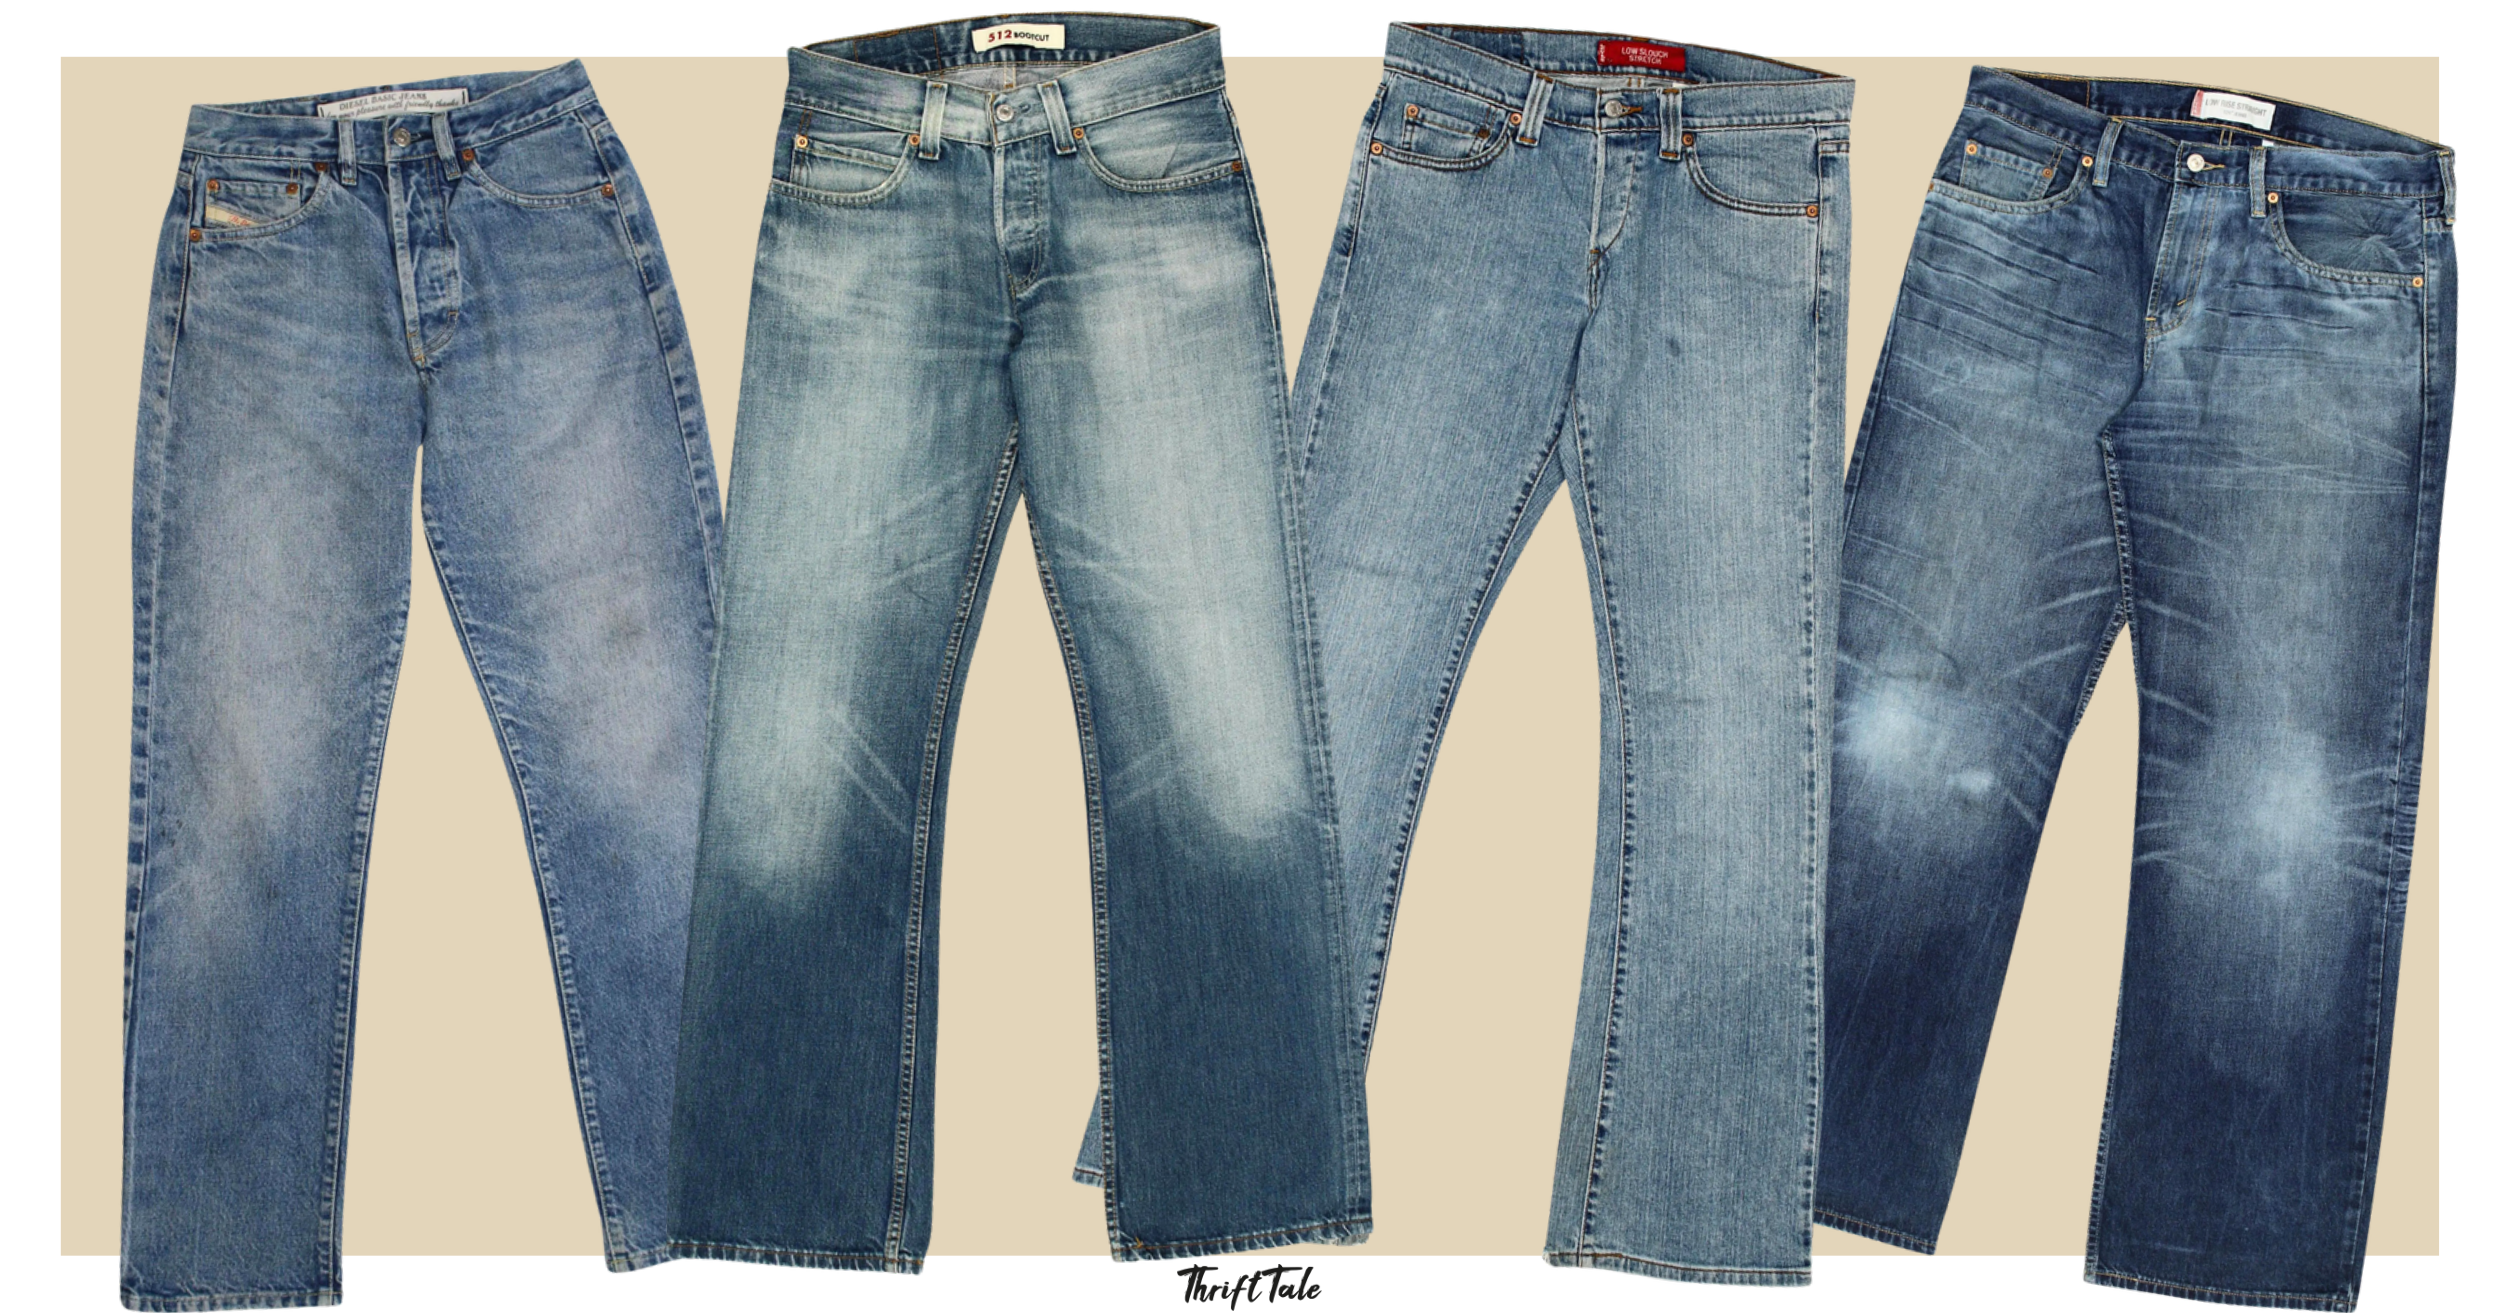 90s men's jeans